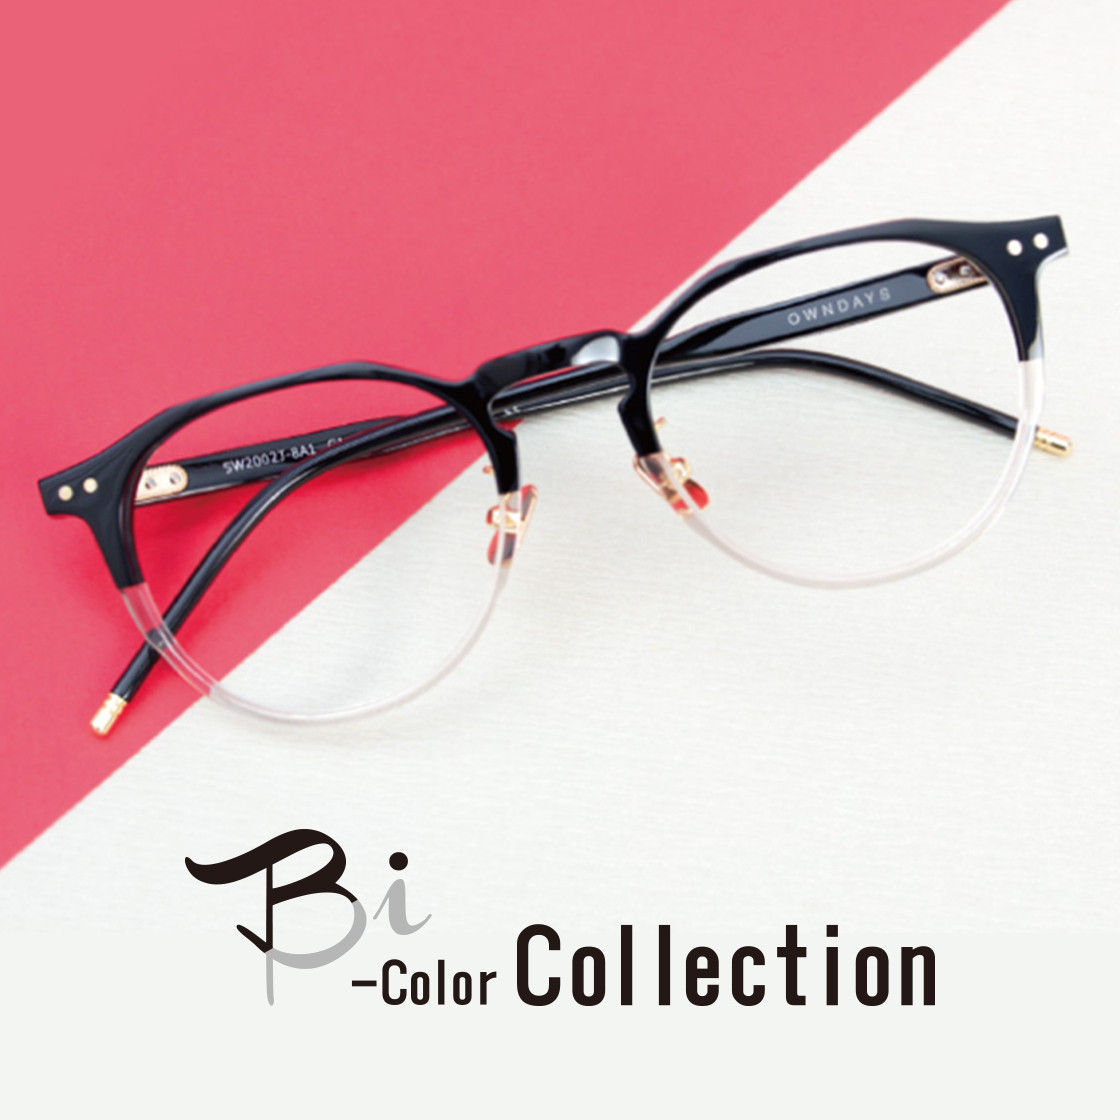 Bi-Color Collection